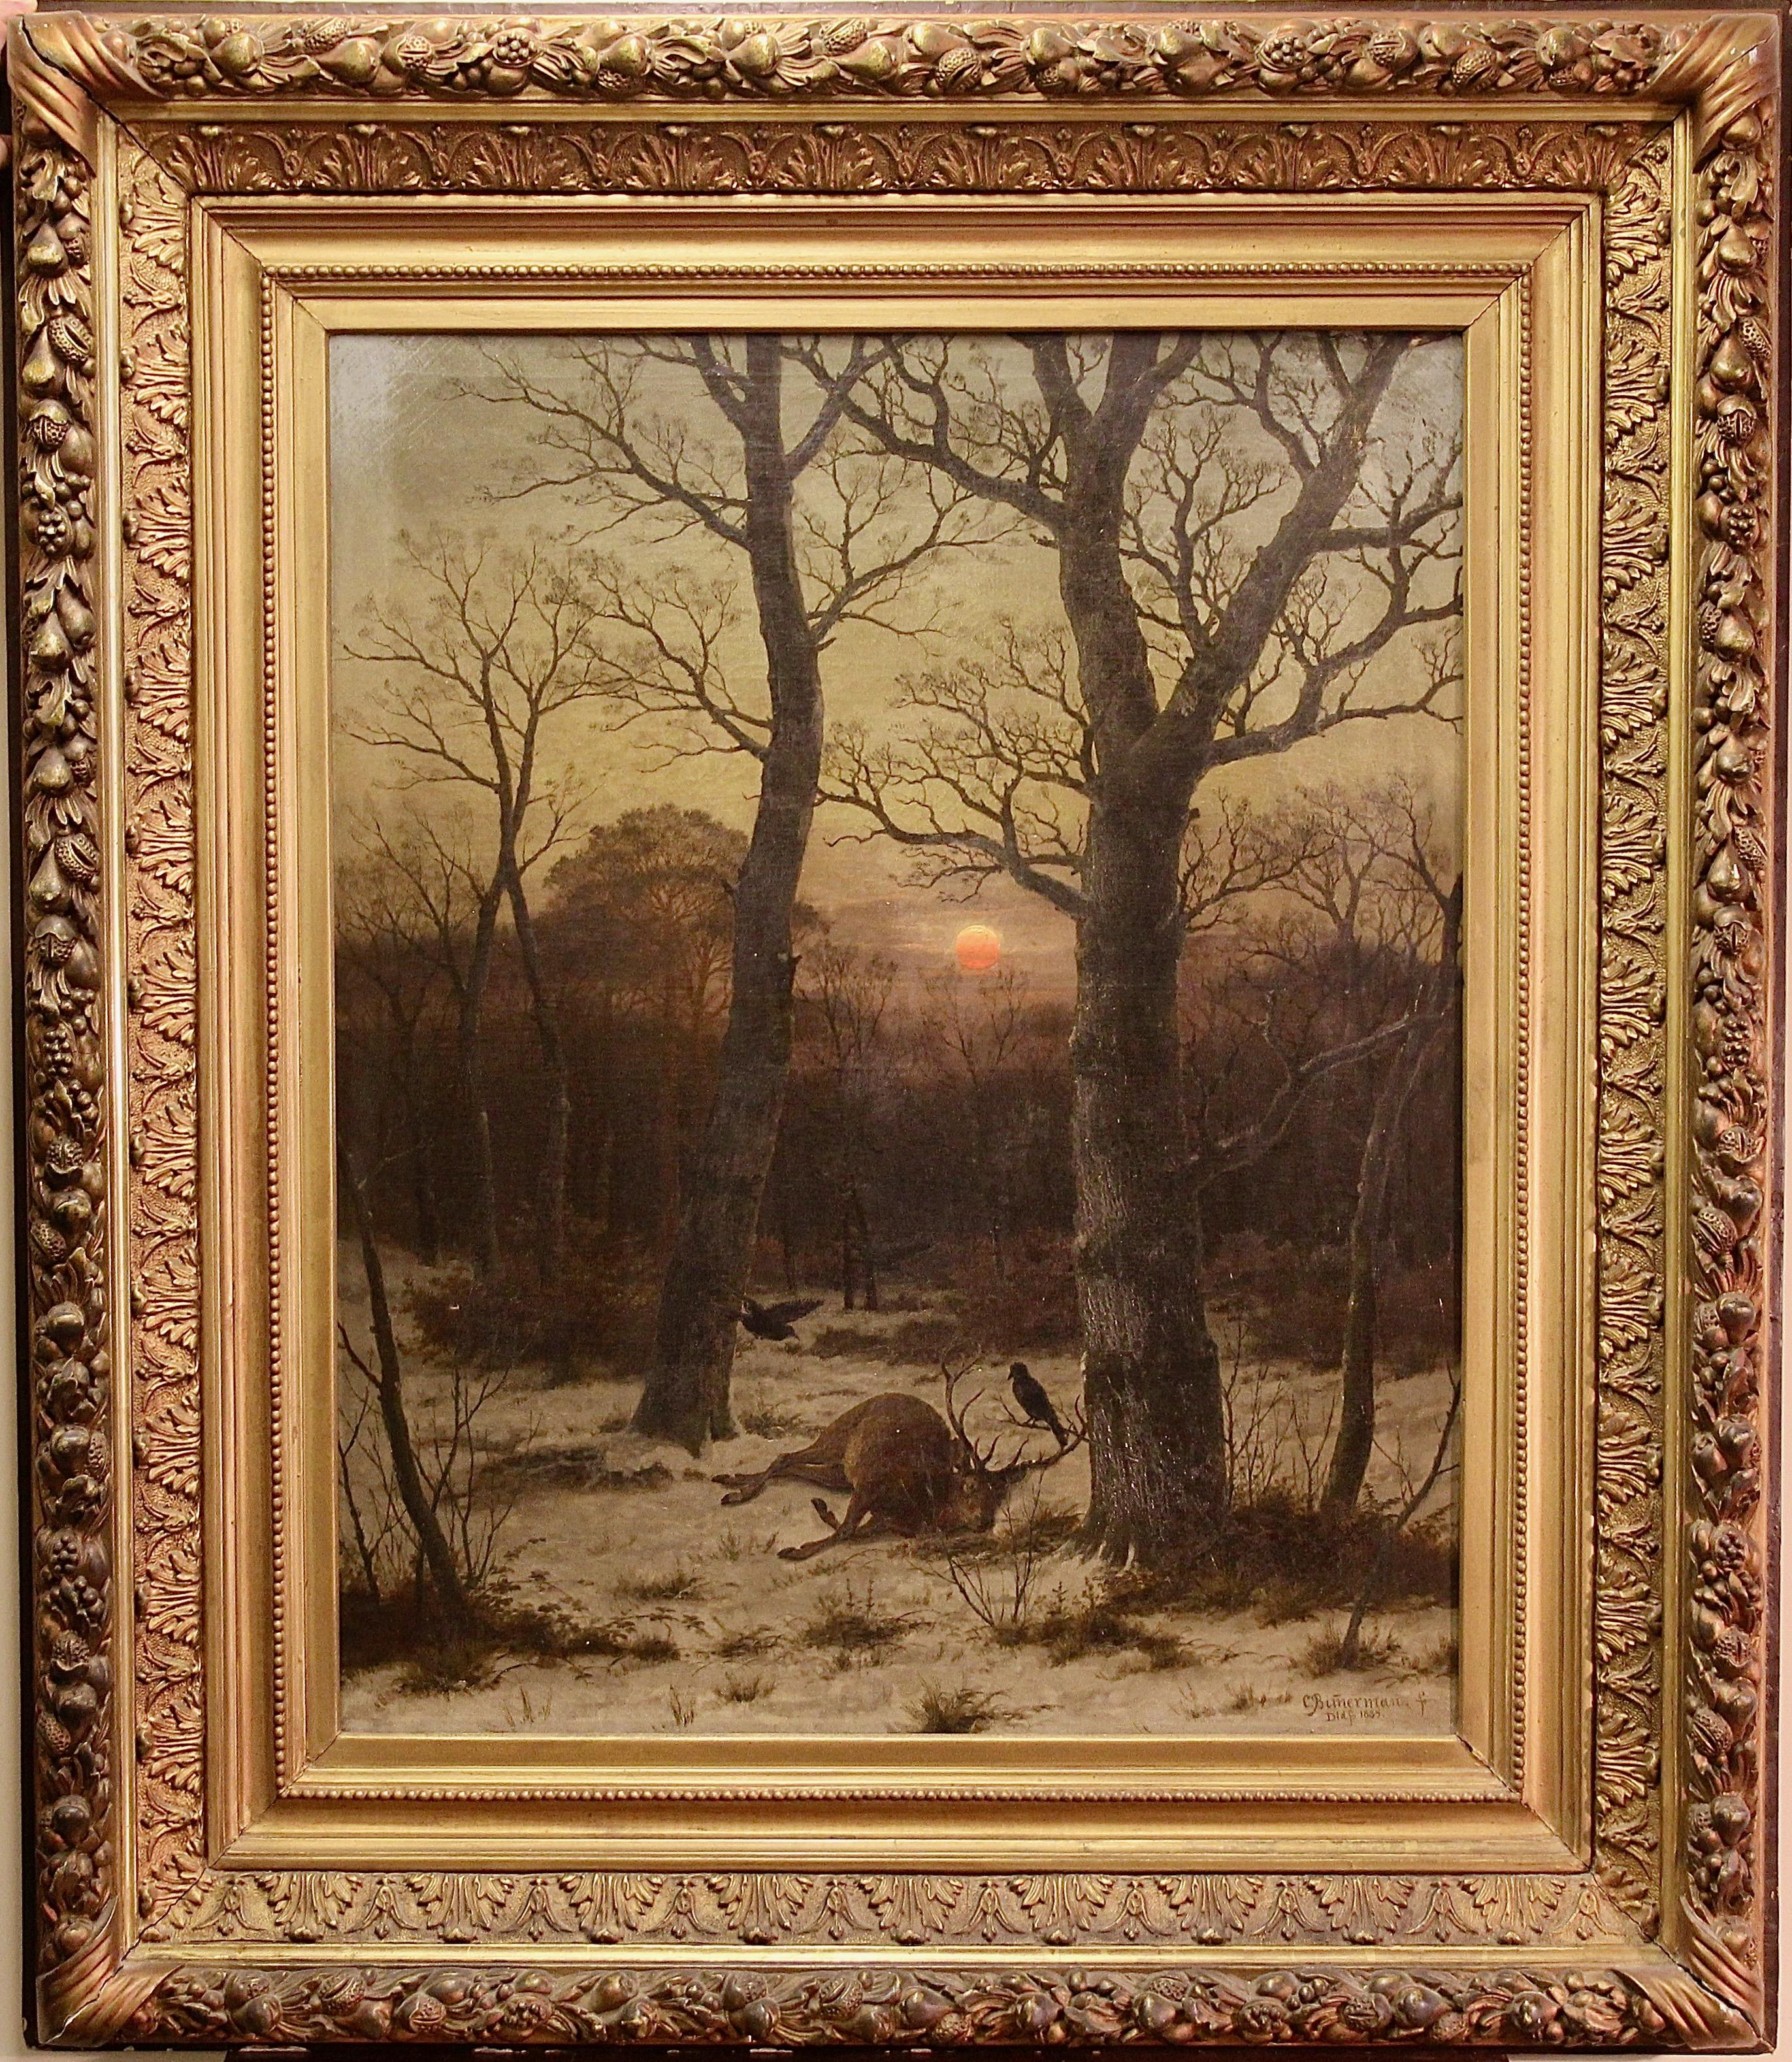 Peter Franz Caesar Bimmermann Animal Painting - Caeser Bimmermann, Oil Painting, 1885. Snowy Winter Landscape with Deer.